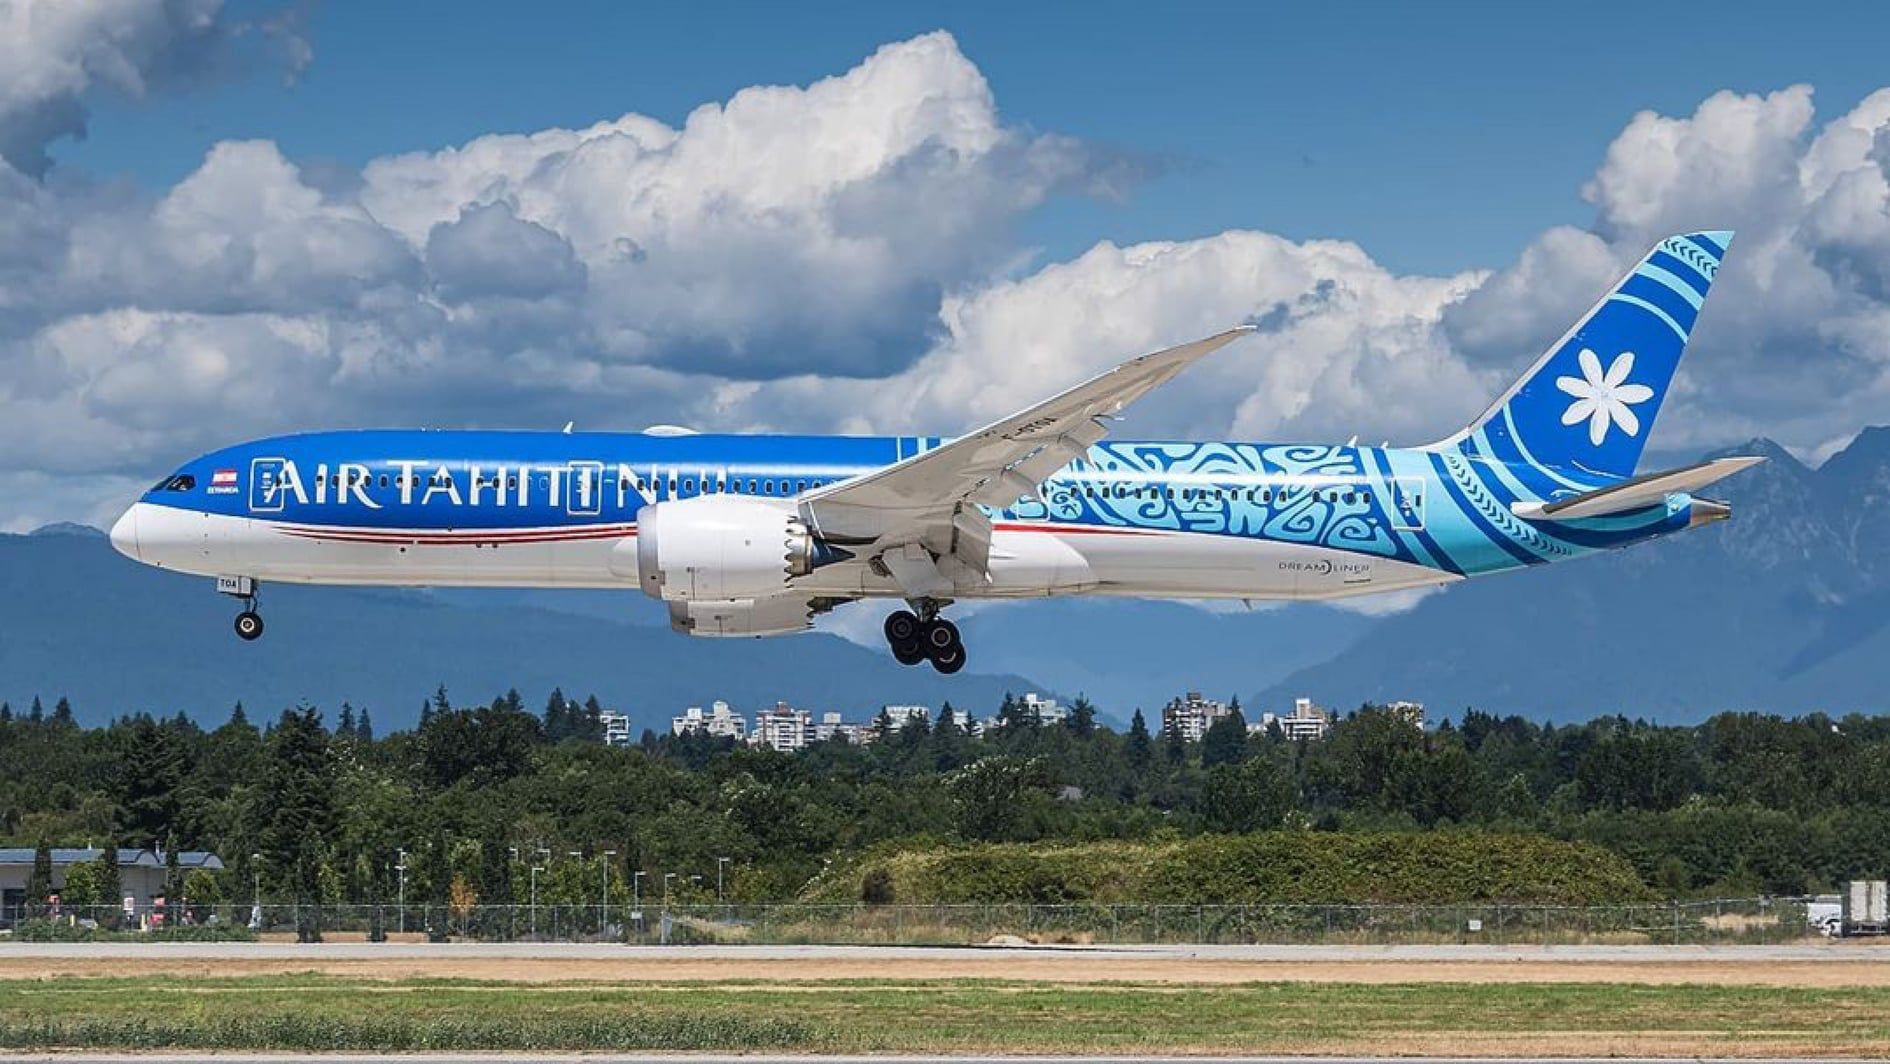 Air Tahiti nui Boeing 787-9